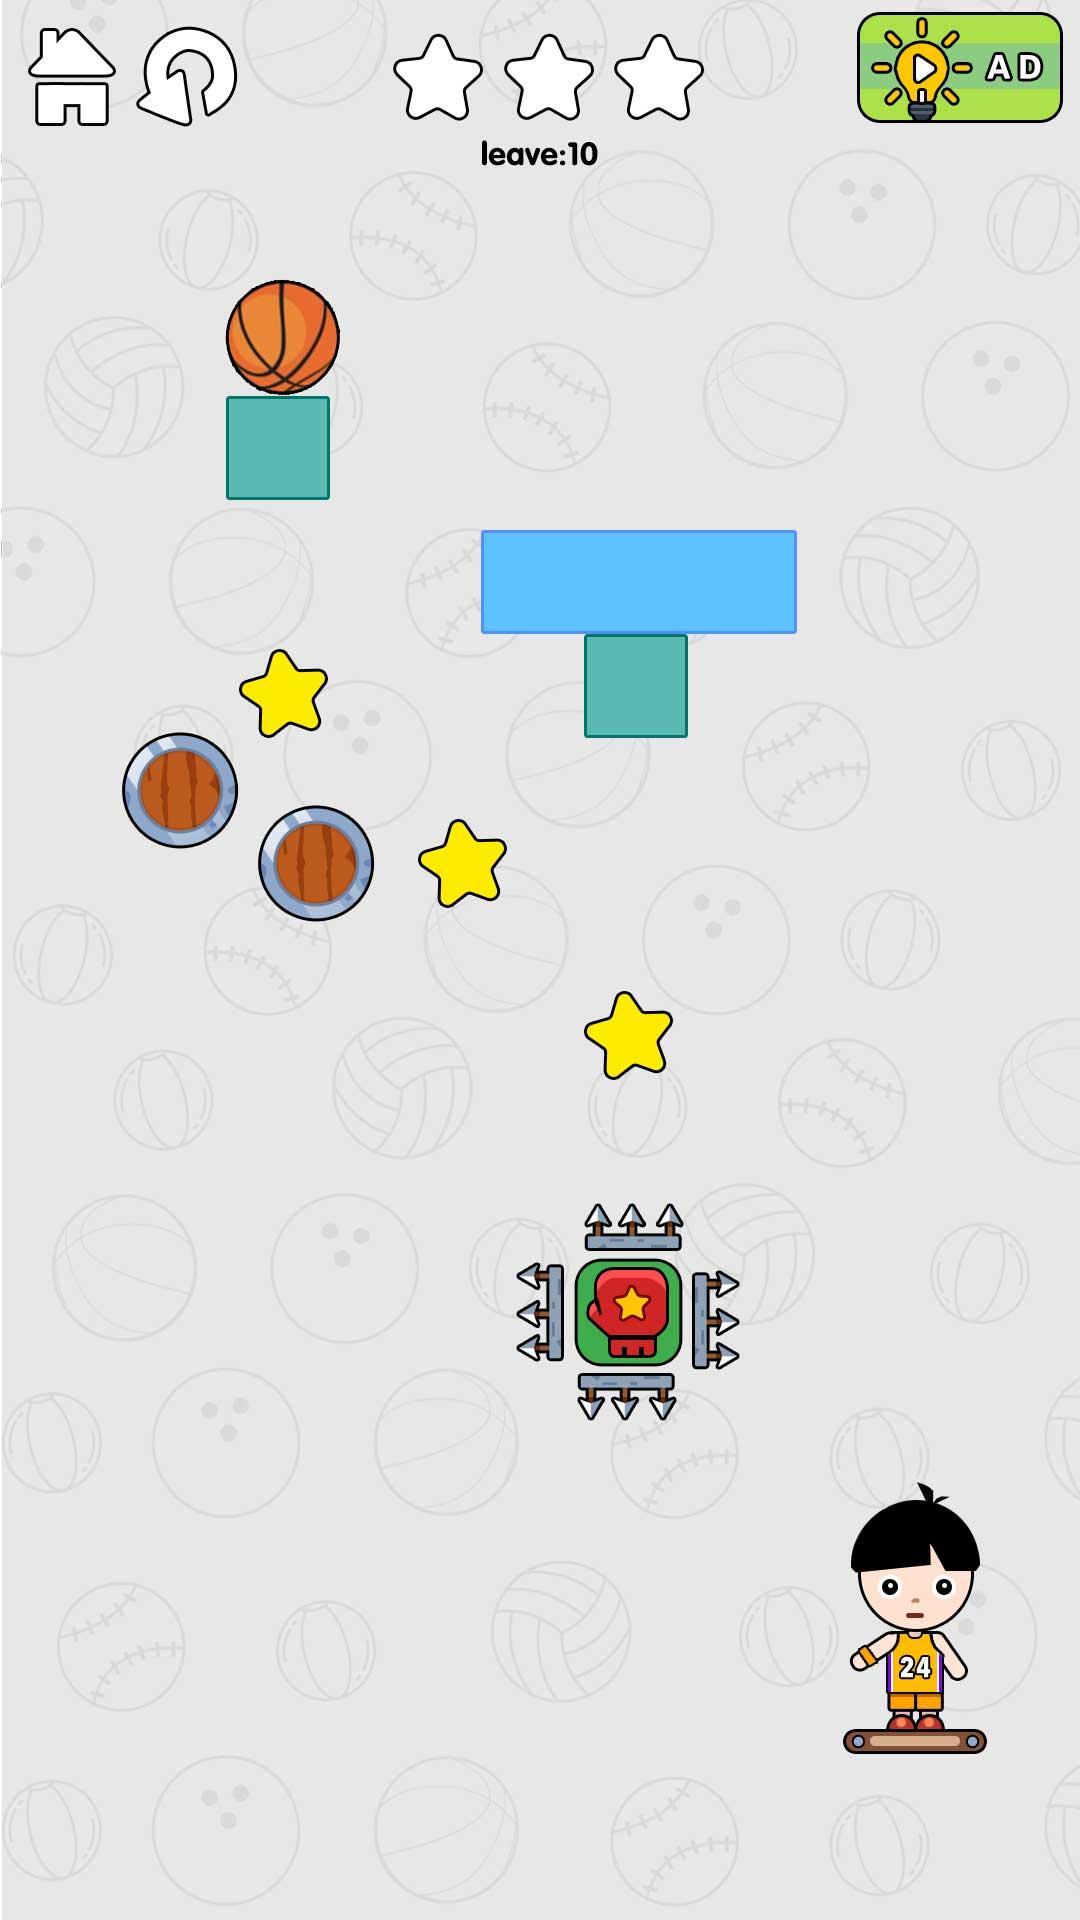 Splat Ball screenshot game